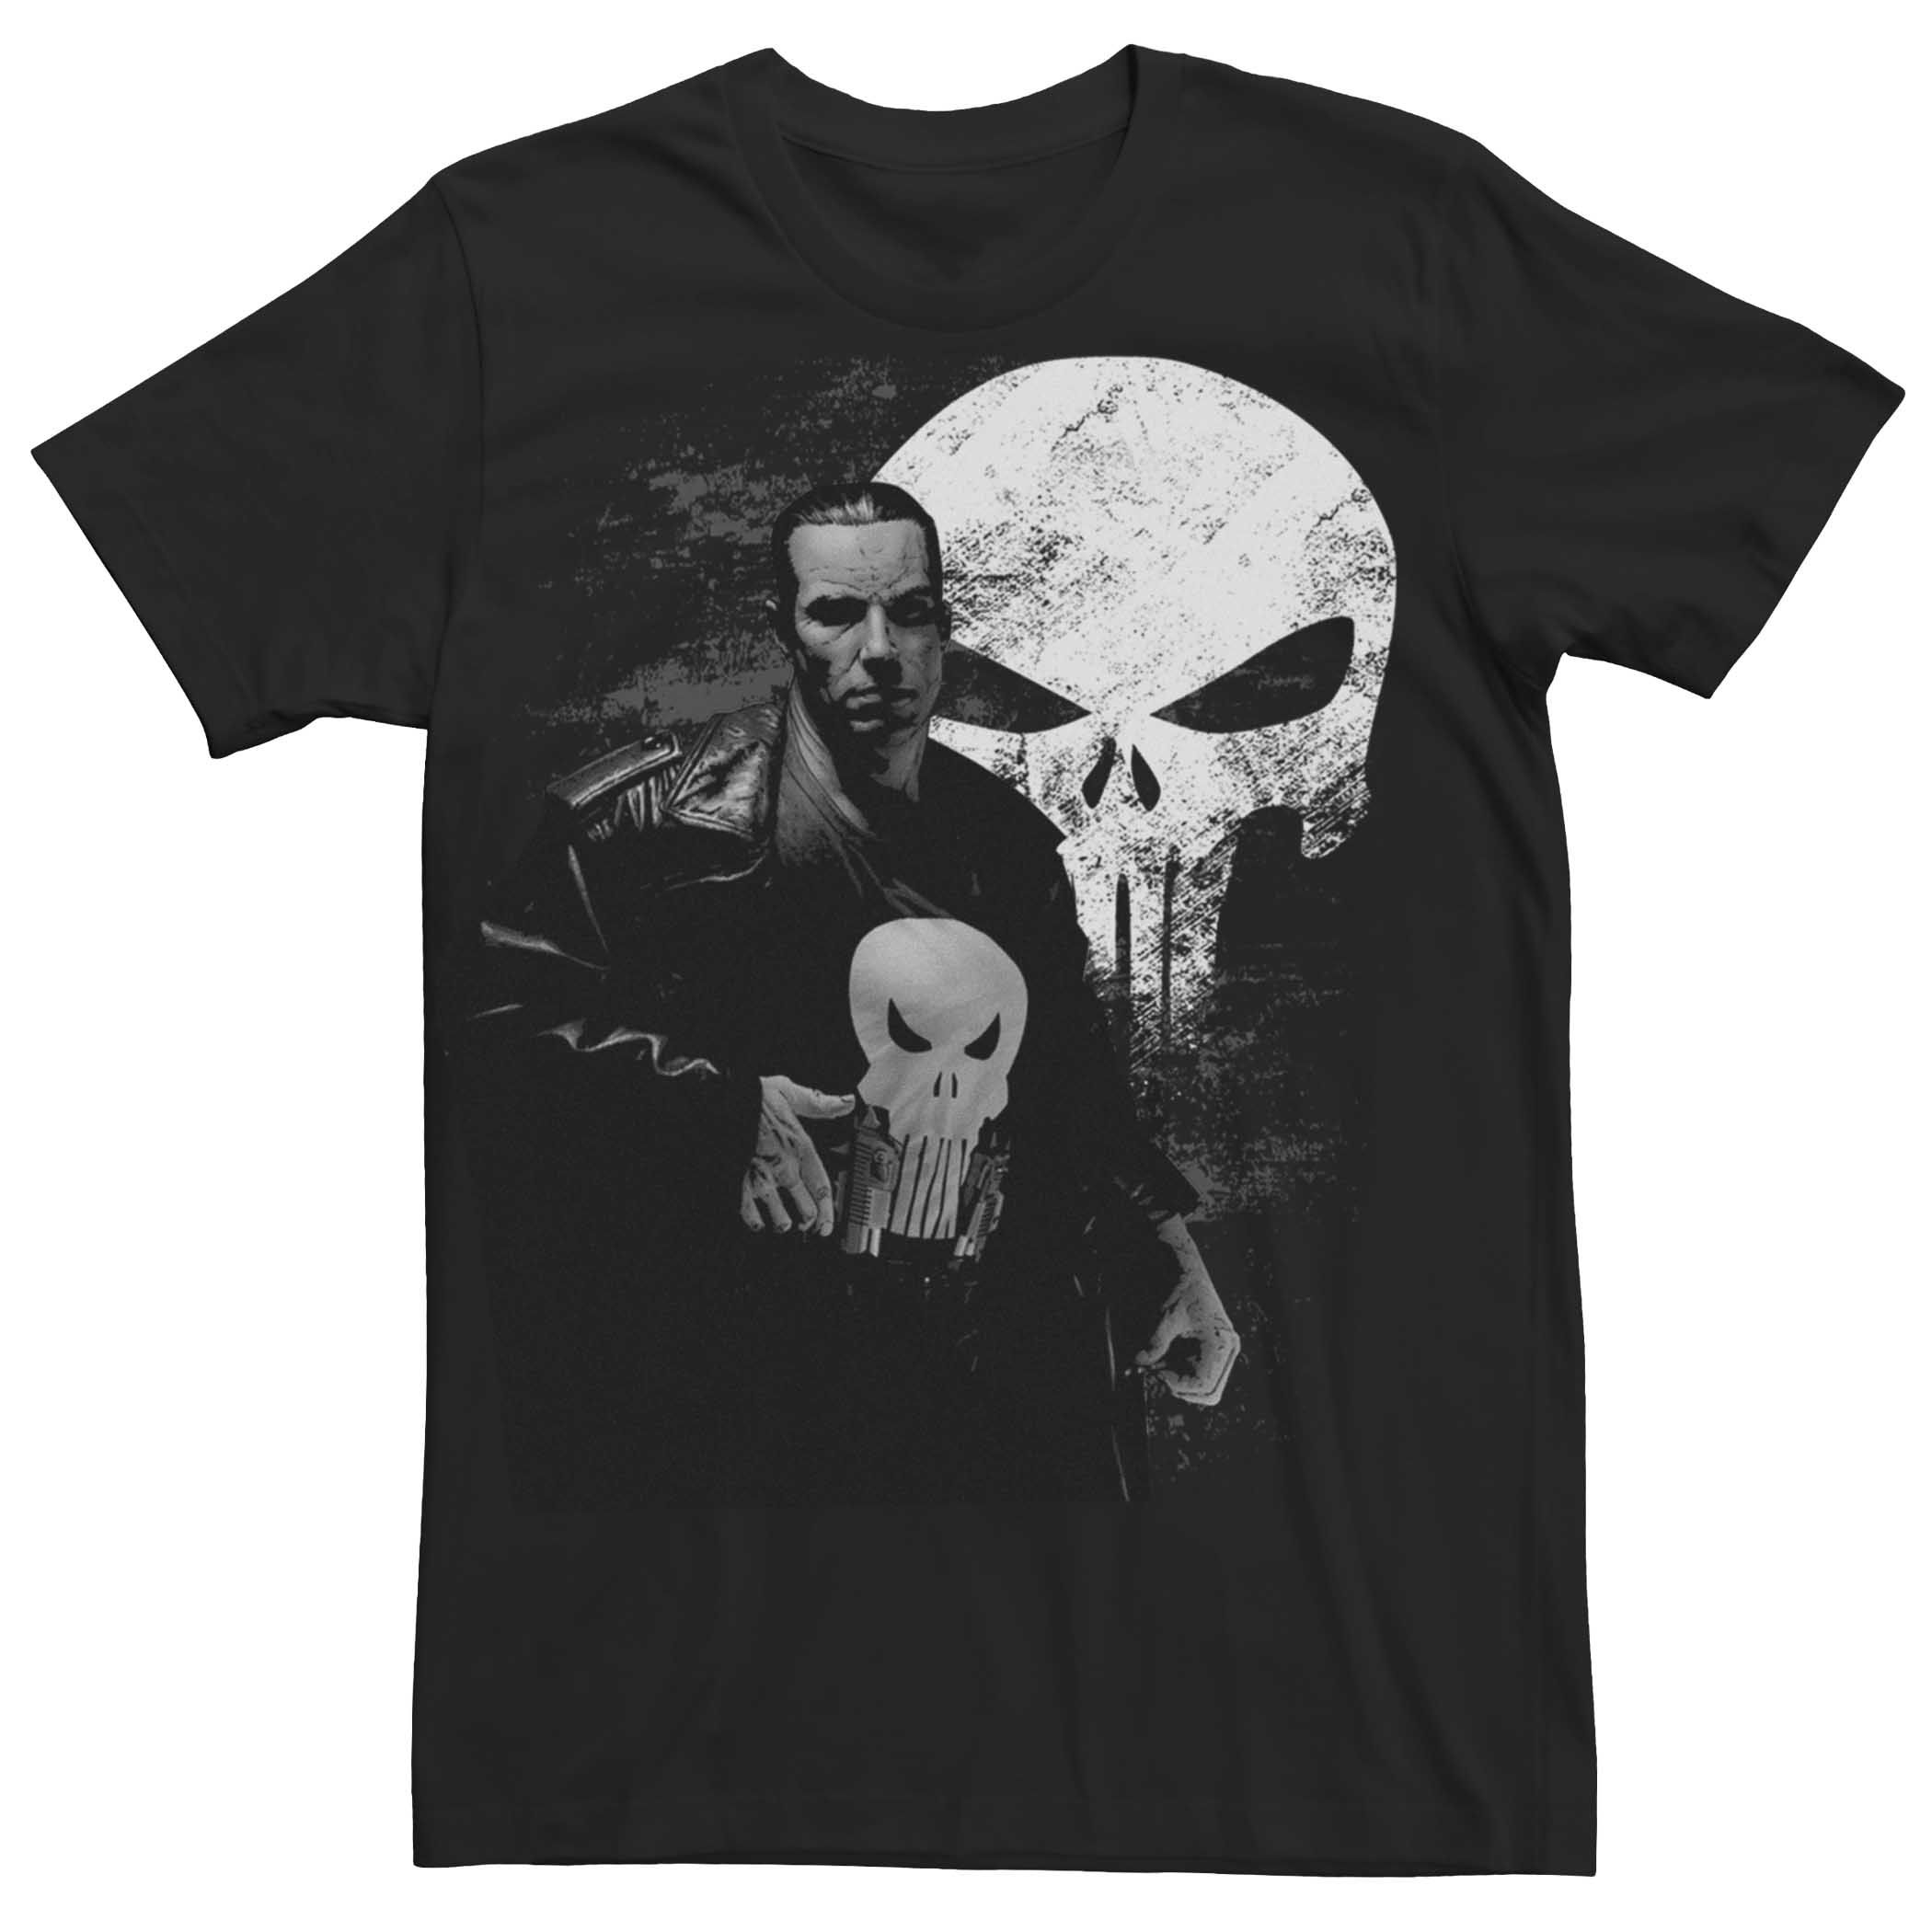 Мужская футболка с портретом Marvel Punisher Night Licensed Character футболка мужская marvel punisher s